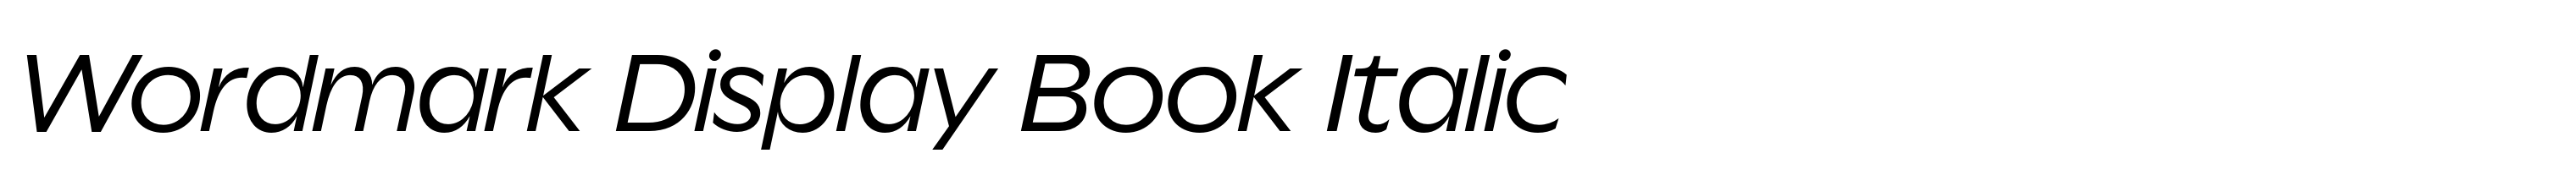 Wordmark Display Book Italic